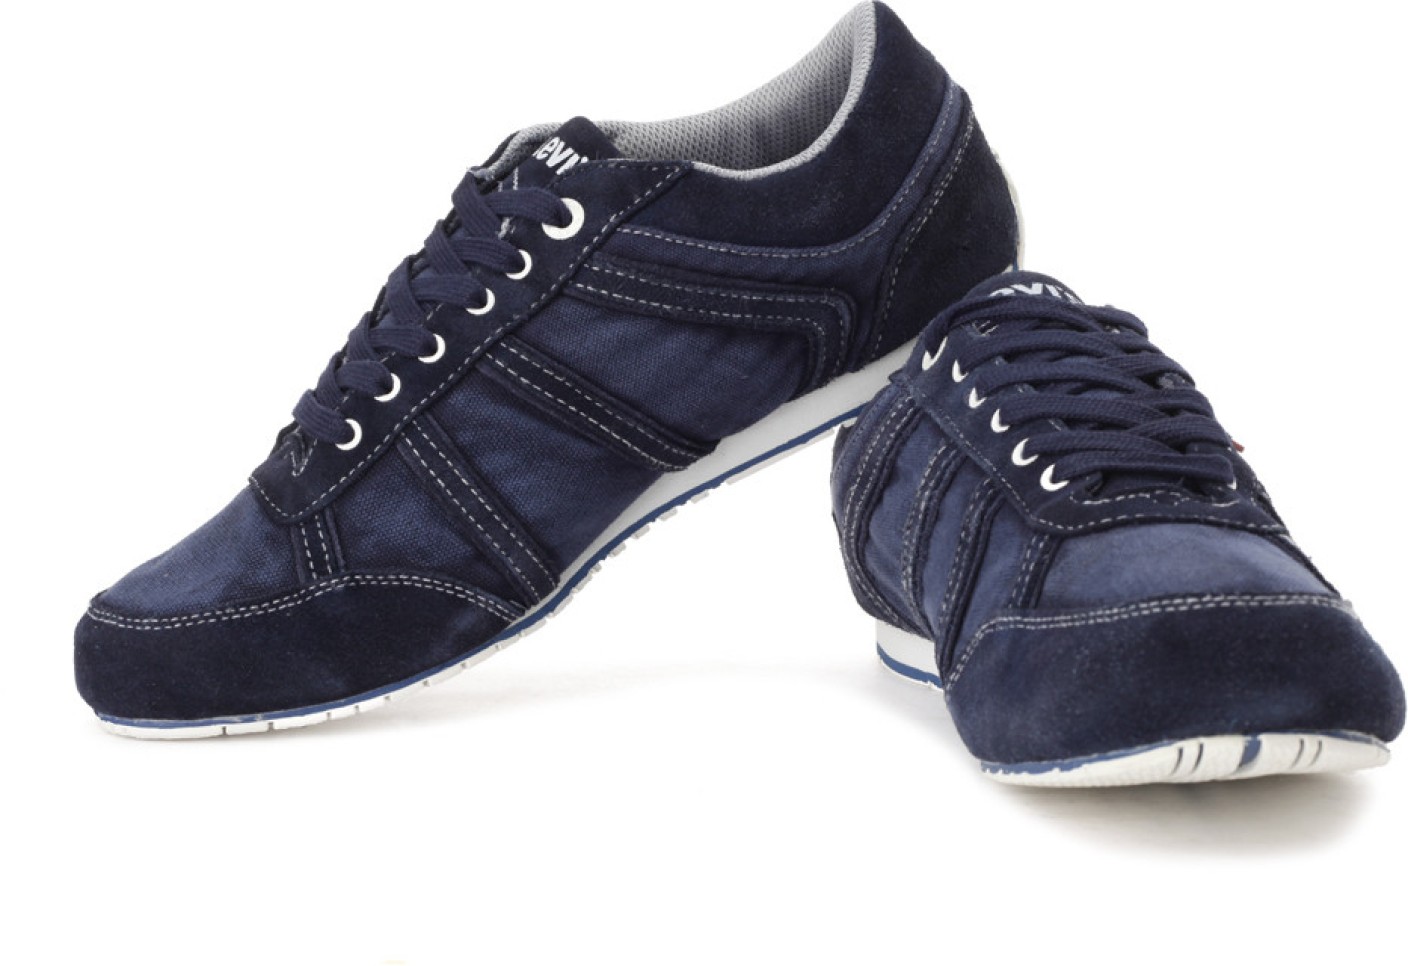 Levi's Rogue Sneakers For Men - Buy Navy Blue Color Levi's Rogue ...